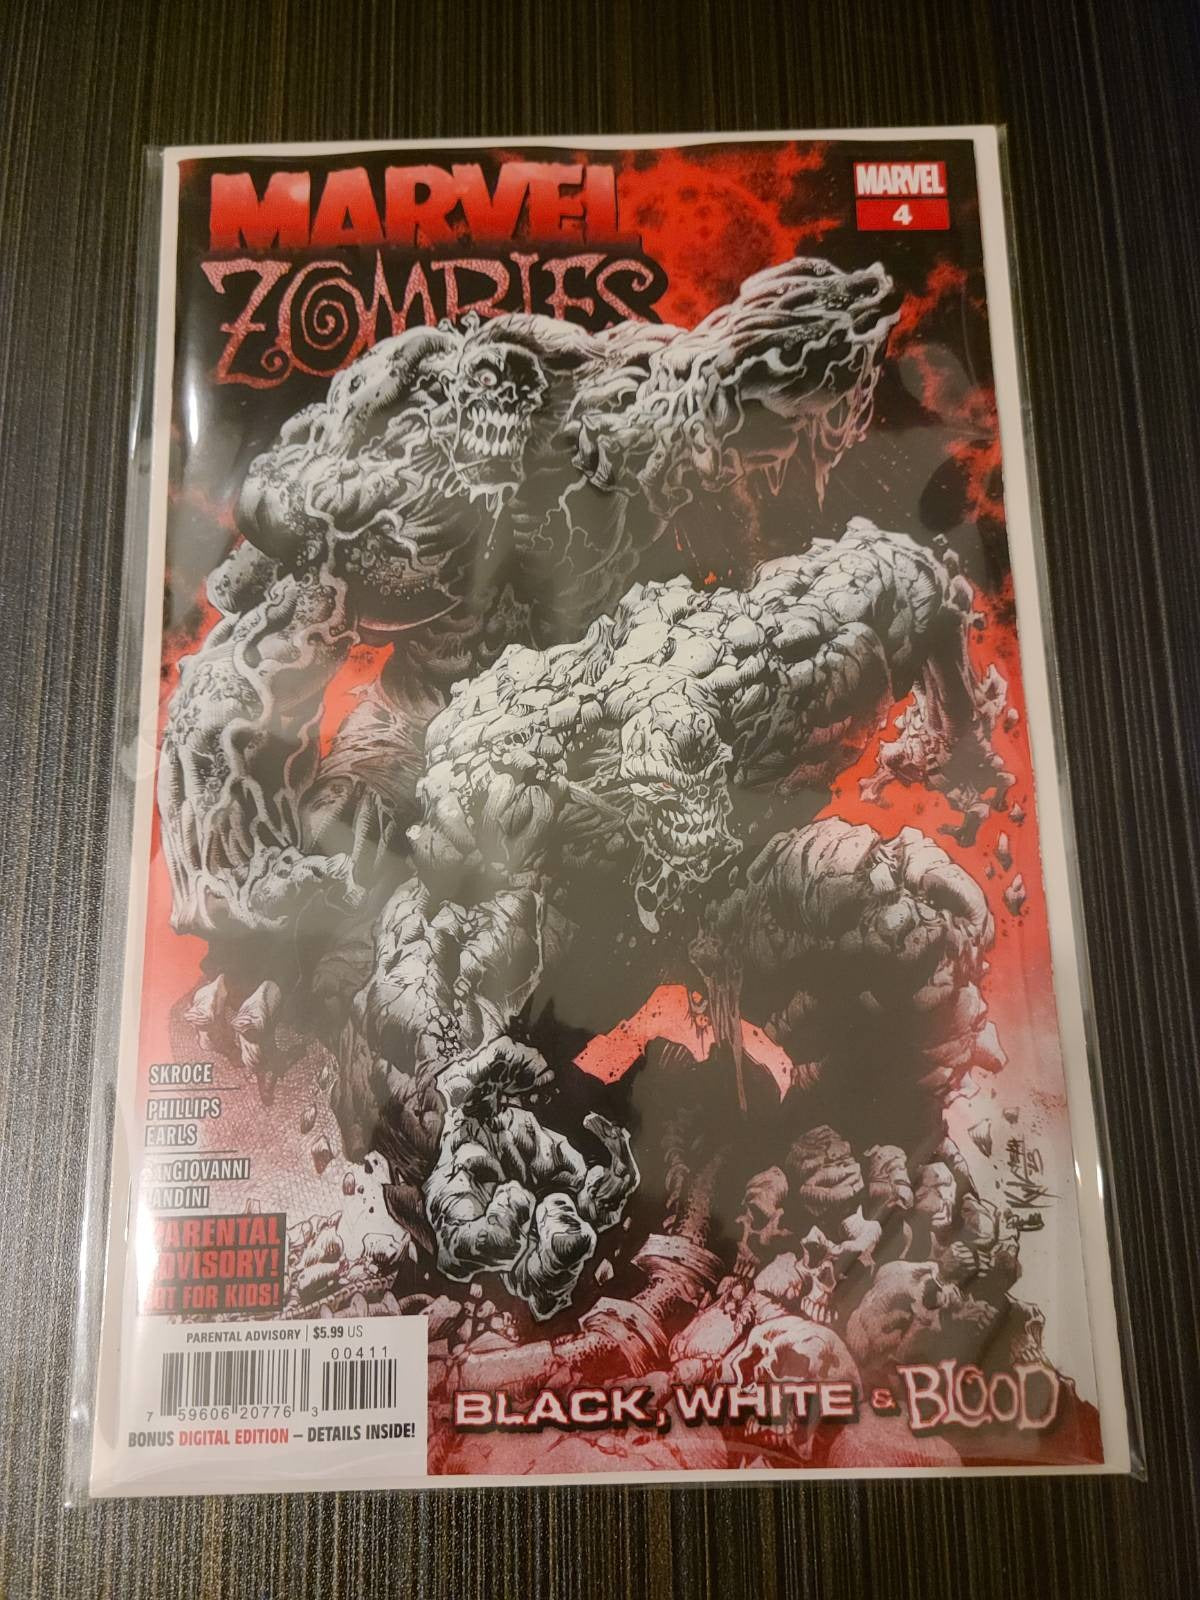 Marvel Zombies: Black, White & Blood #4